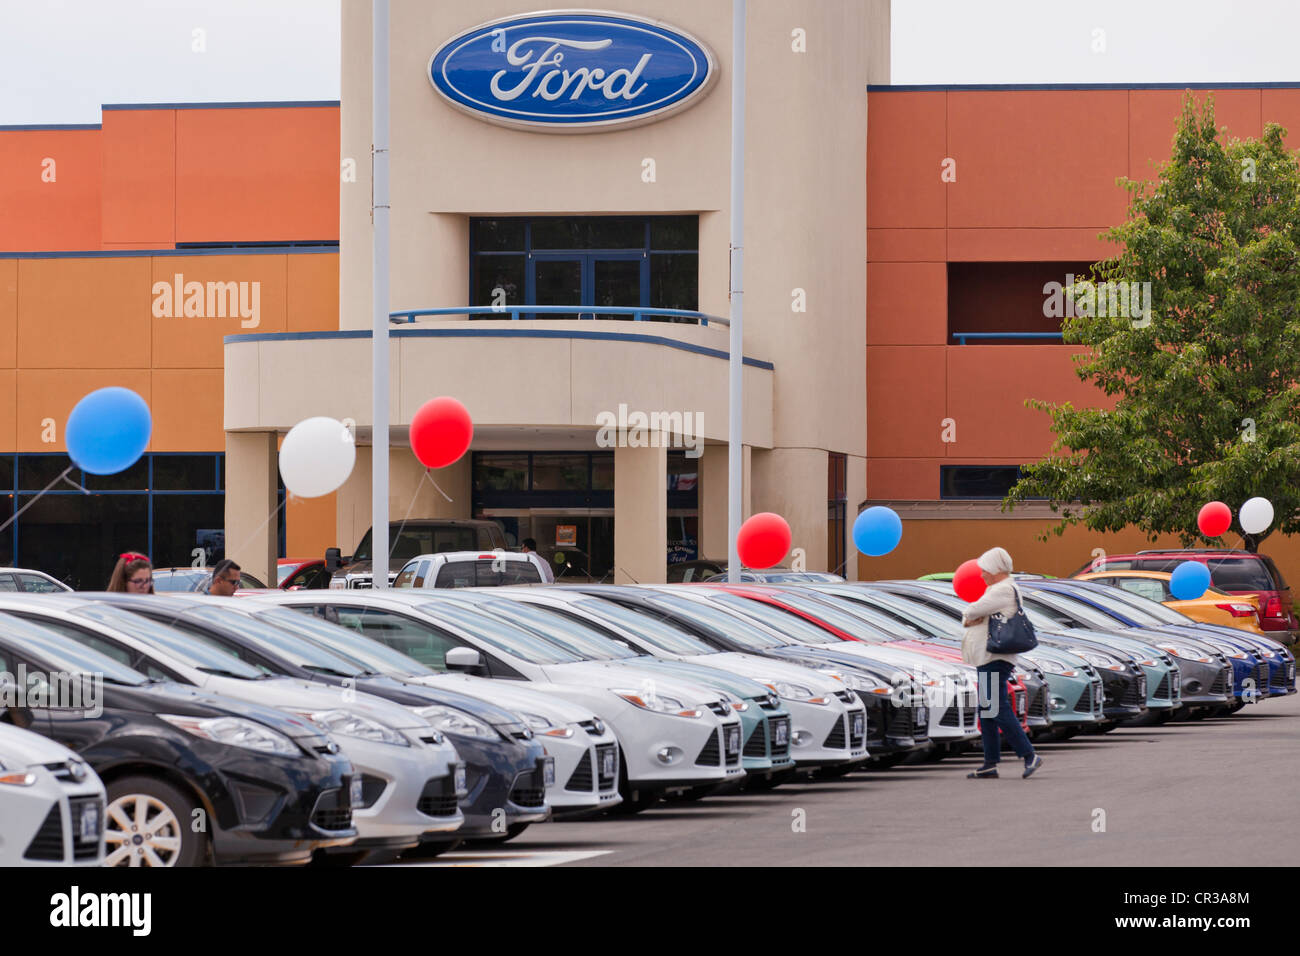 Ford dealership car sales lot Stock Photo